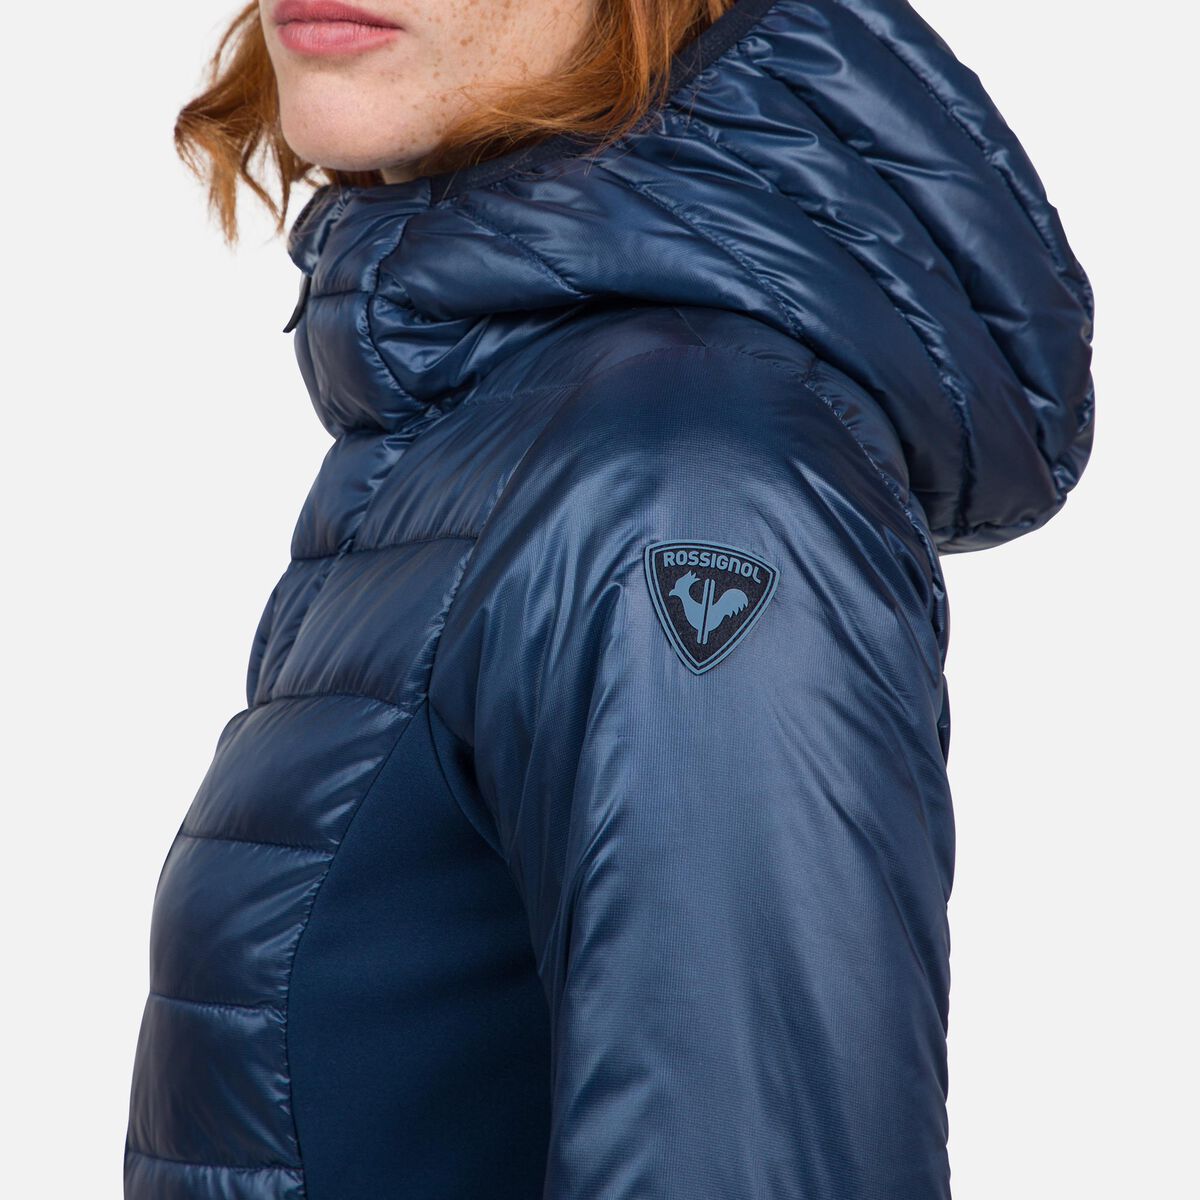 Rossignol Women's SKPR Hybrid Light Jacket blue